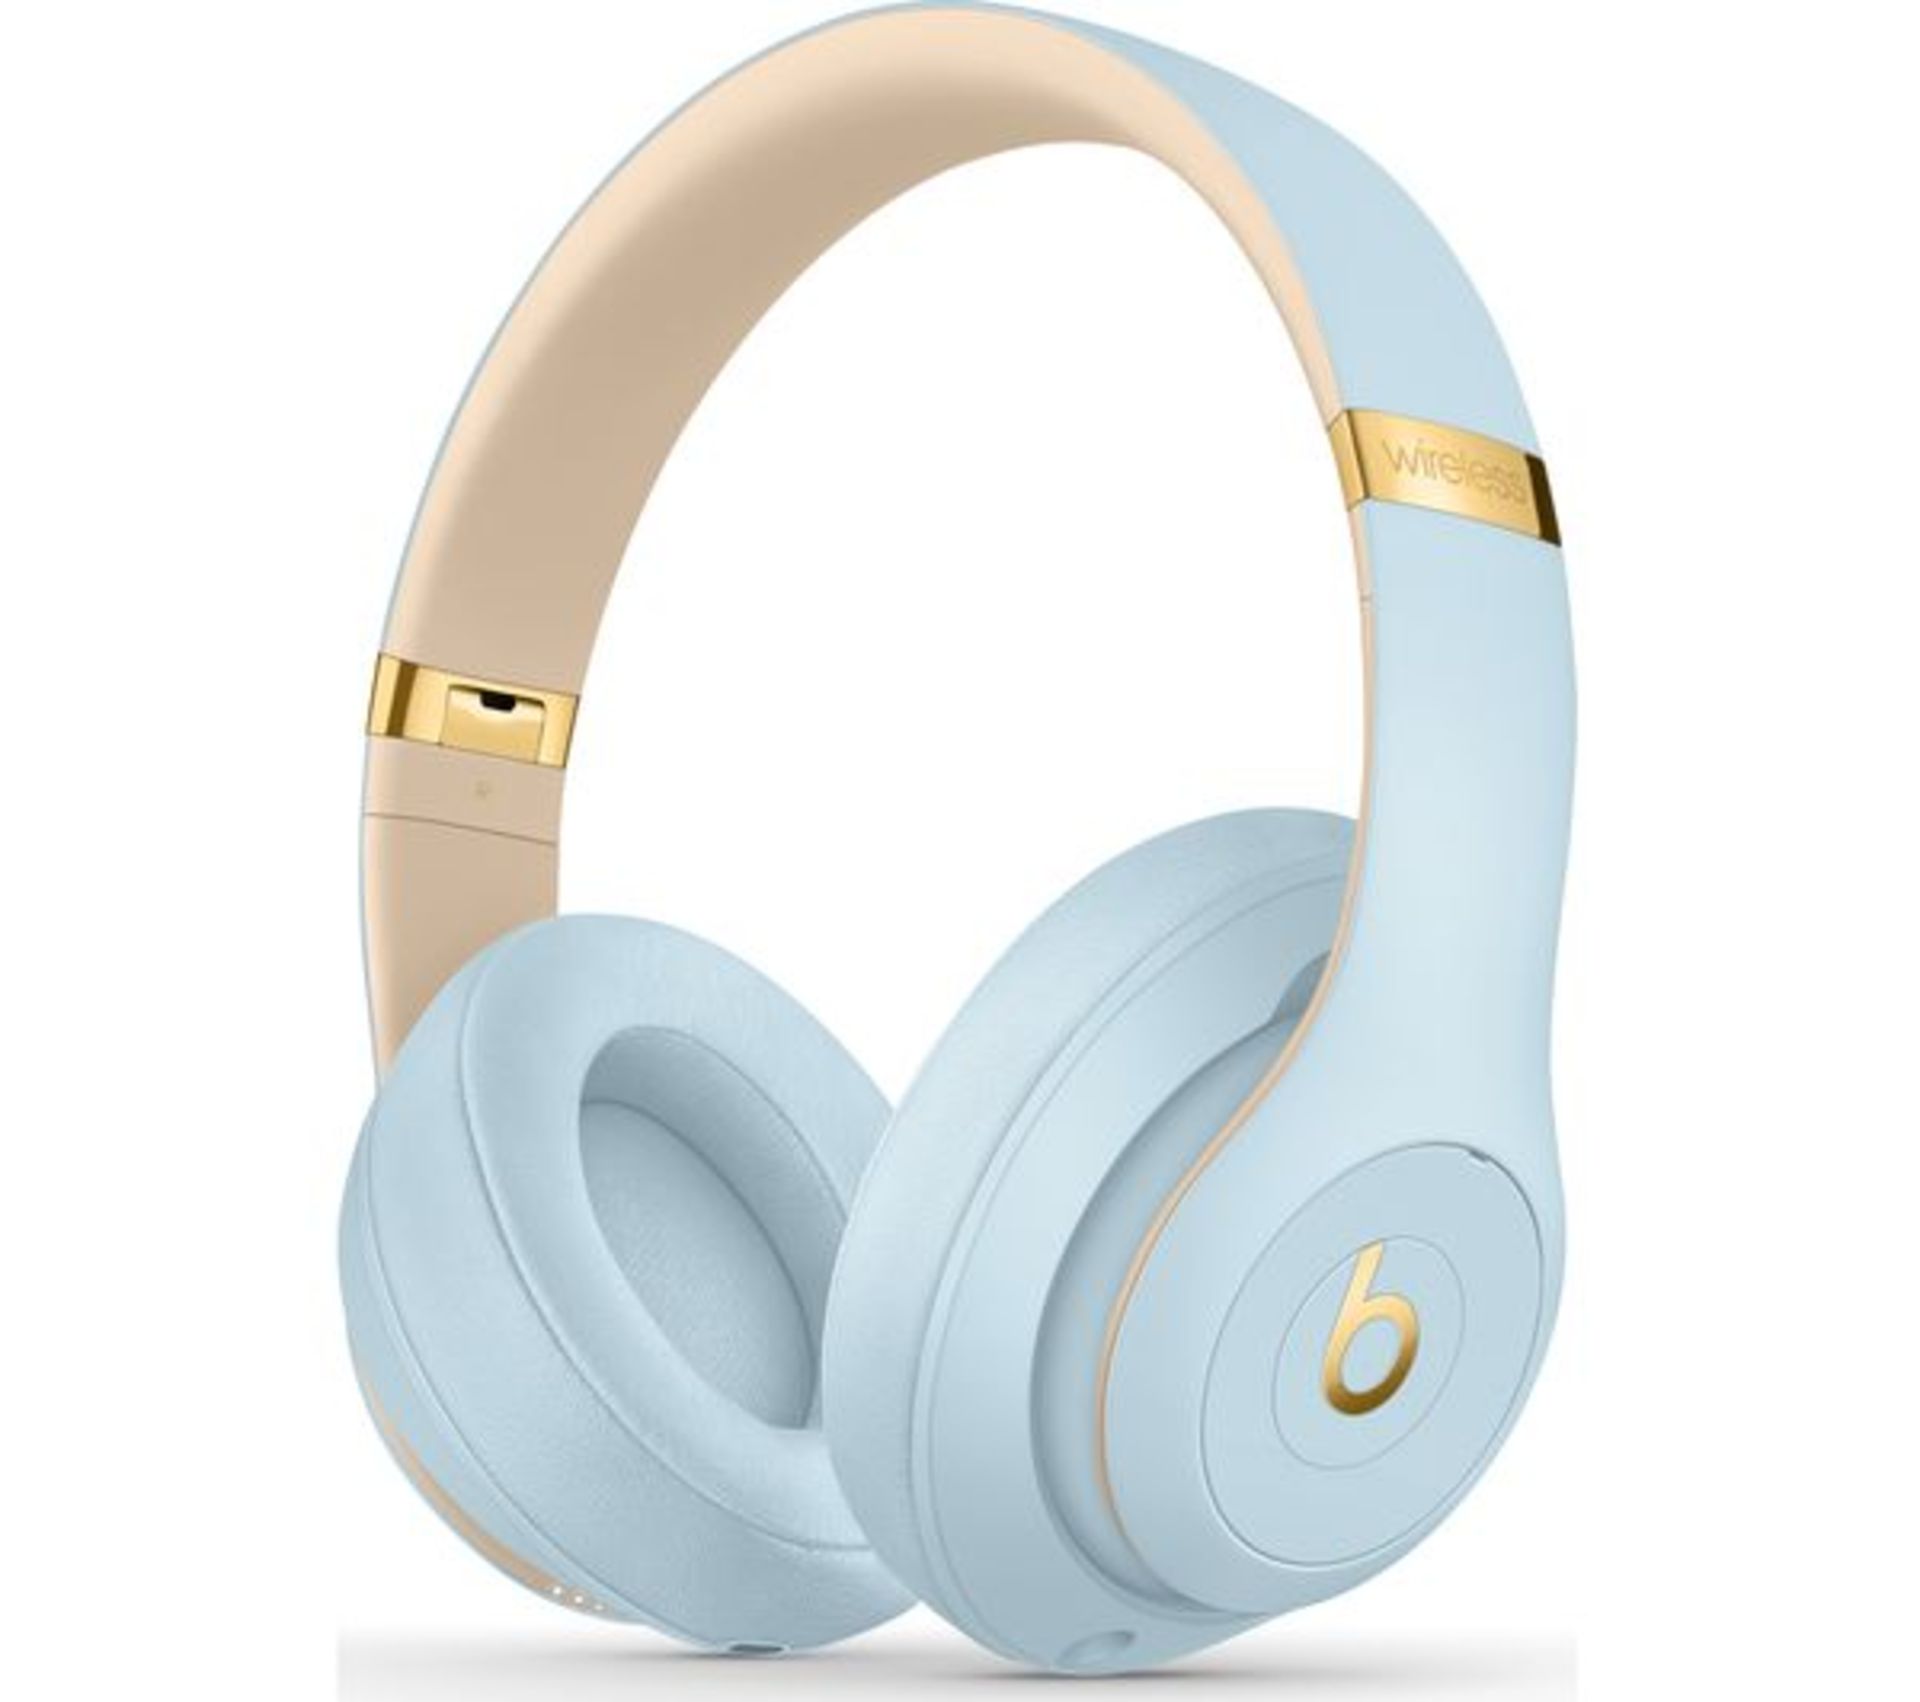 + VAT Brand New Beats Studio 3 Wireless Bluetooth Headphones - Crystal Blue - Up To 22 Hour Battery